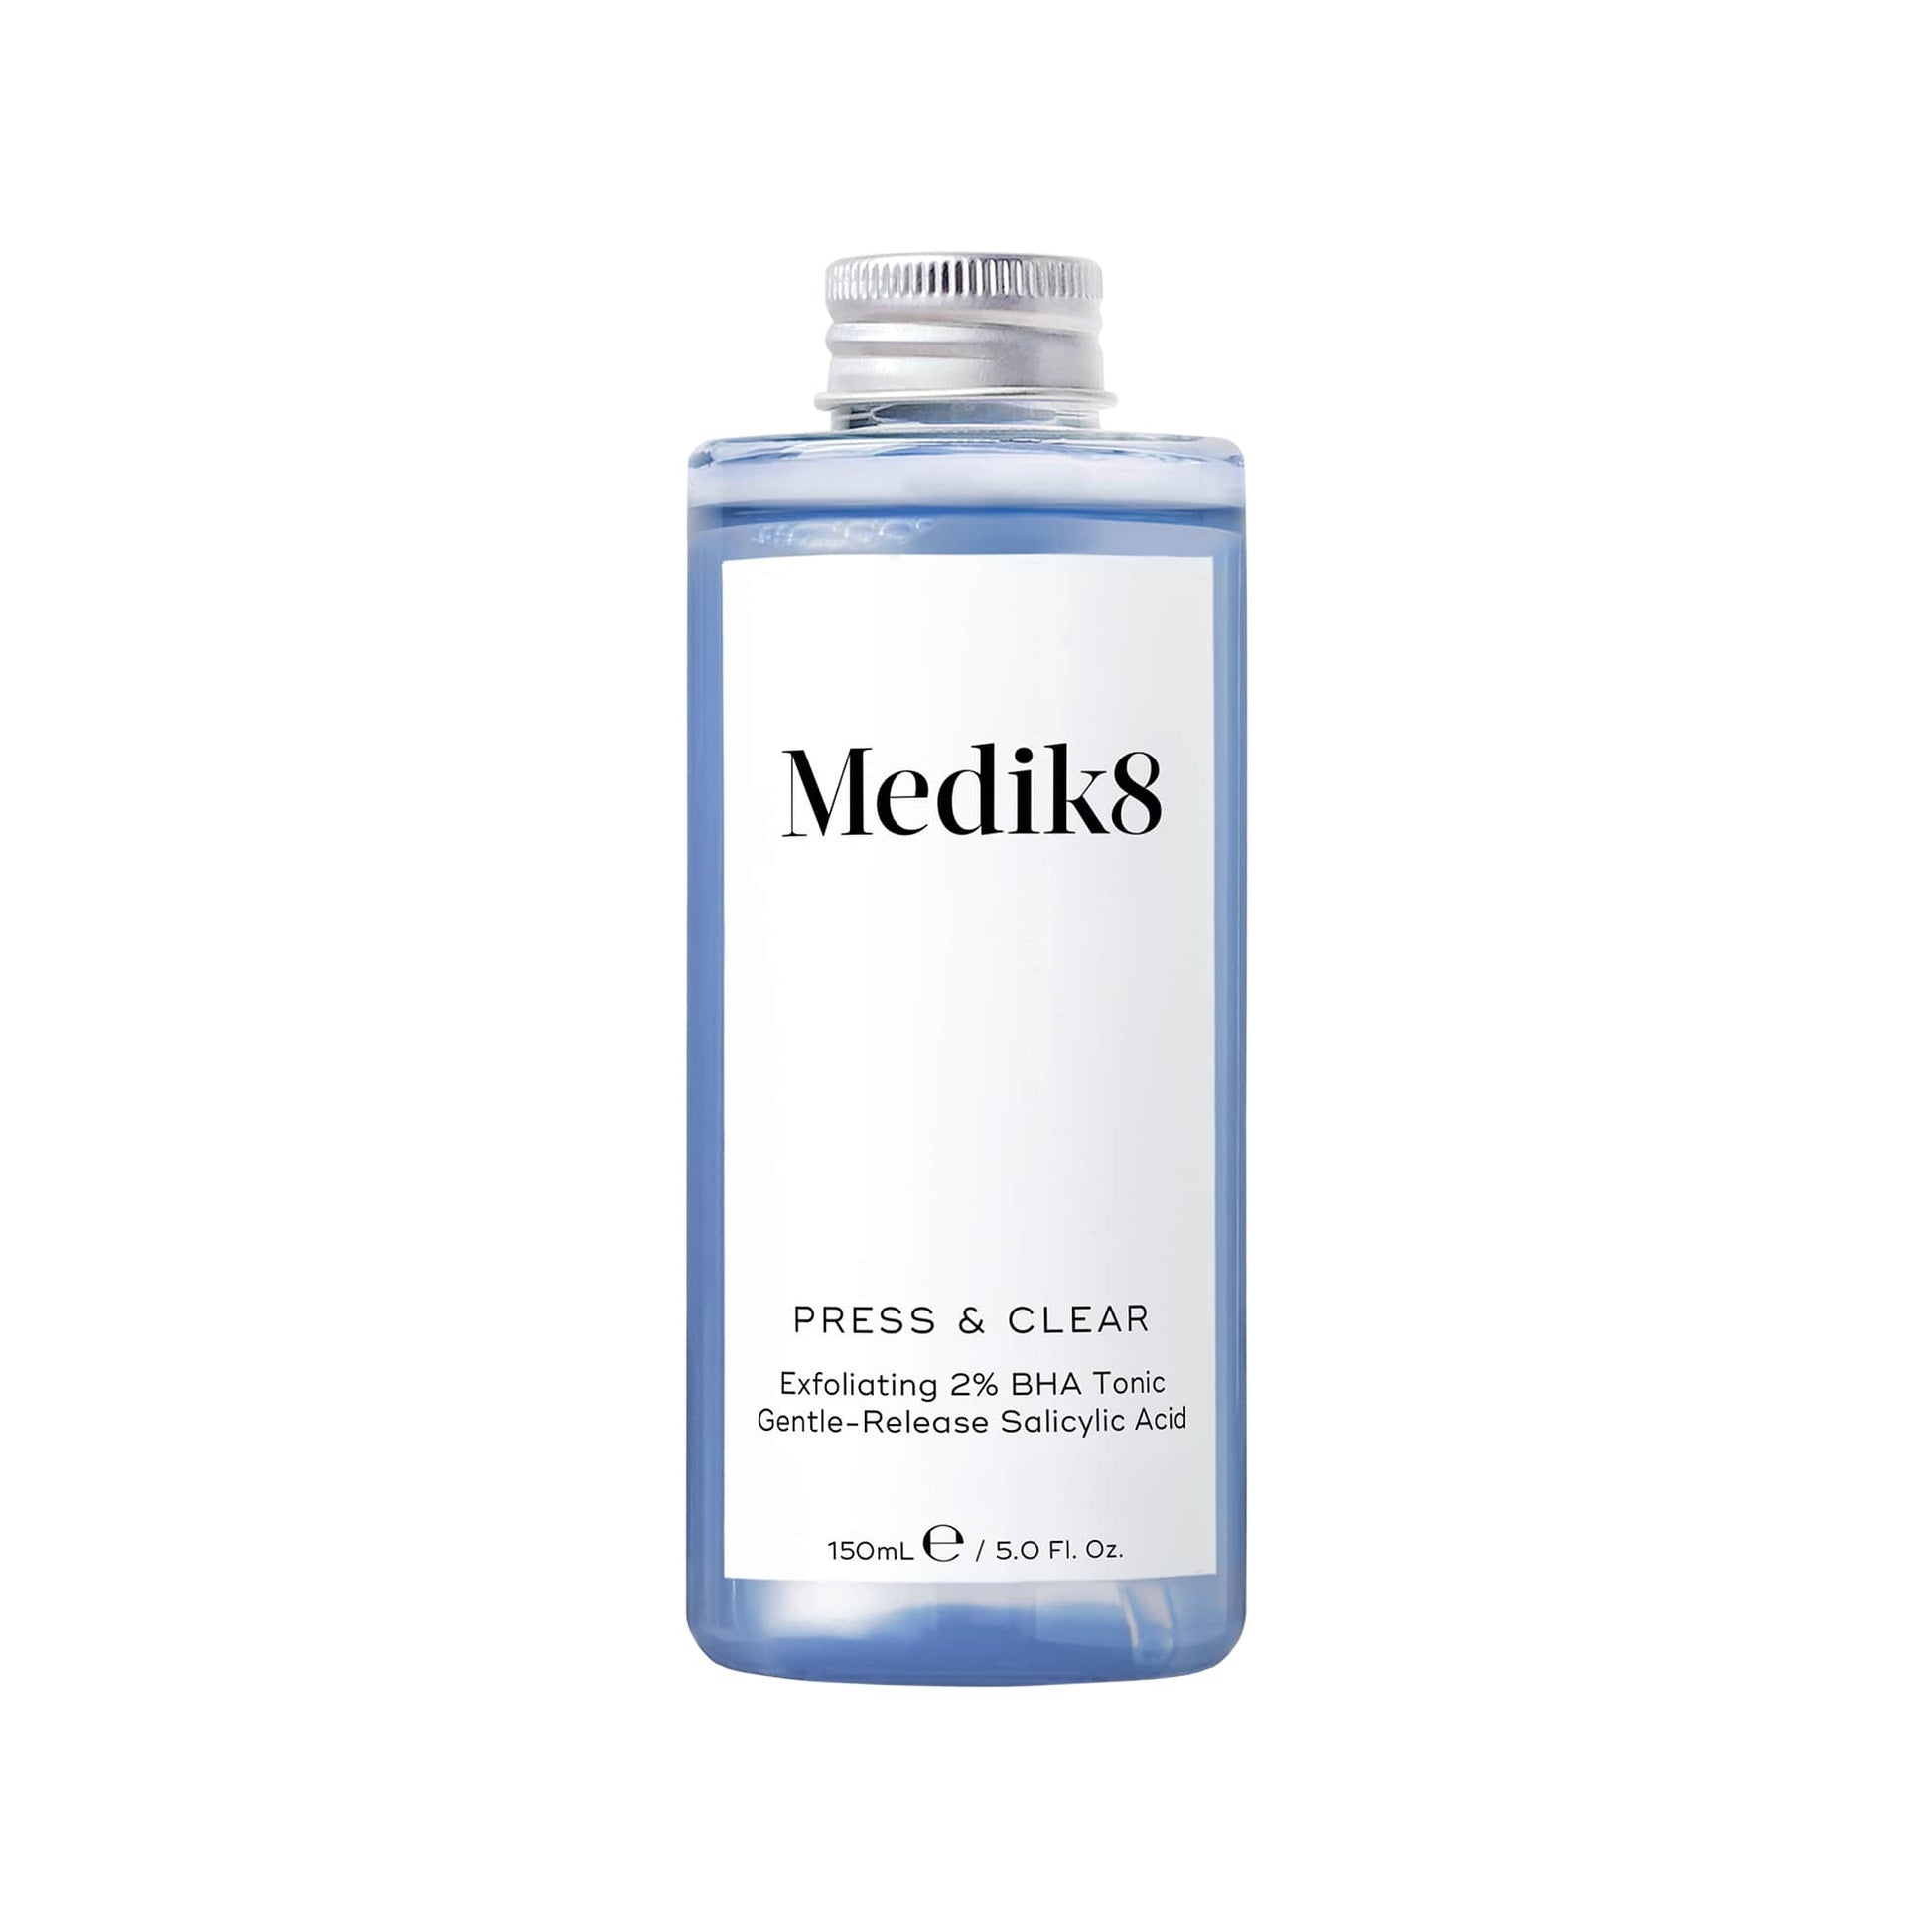 medik8 press & clear refill product image